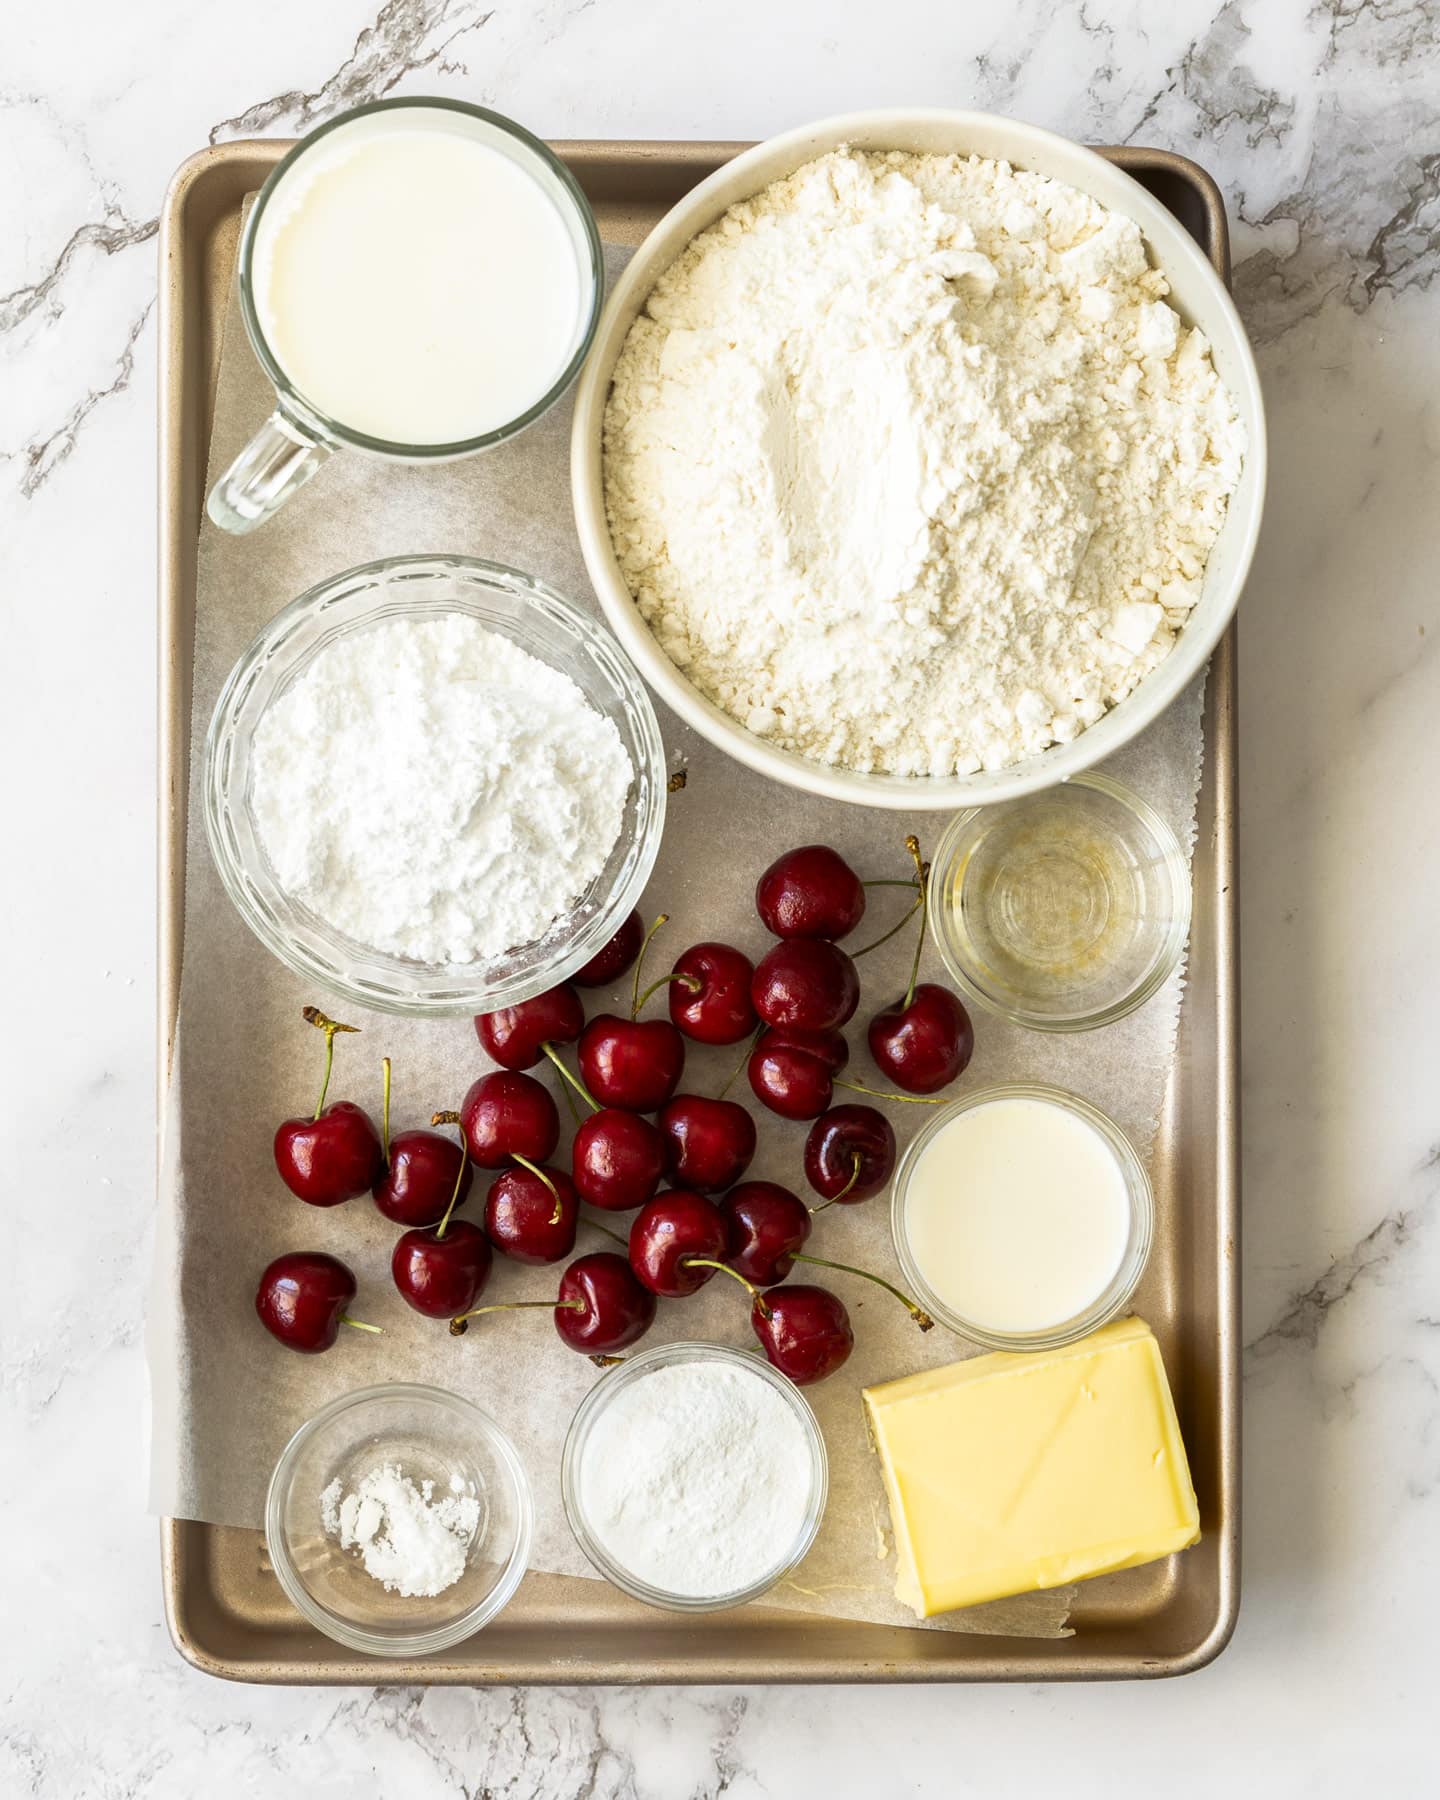 Ingredients for cherry scones.